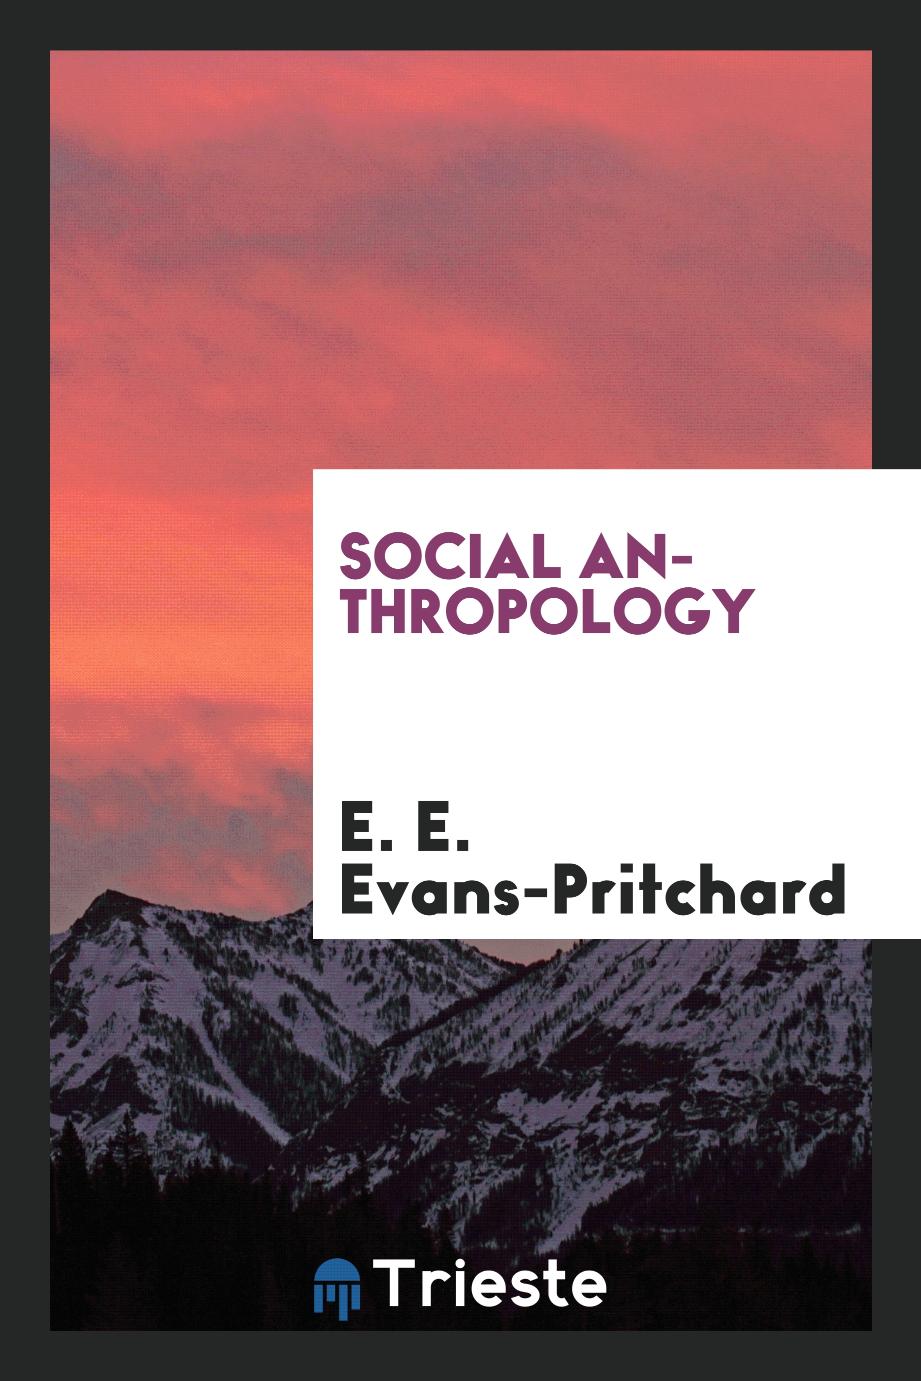 E. E. Evans-Pritchard - Social anthropology